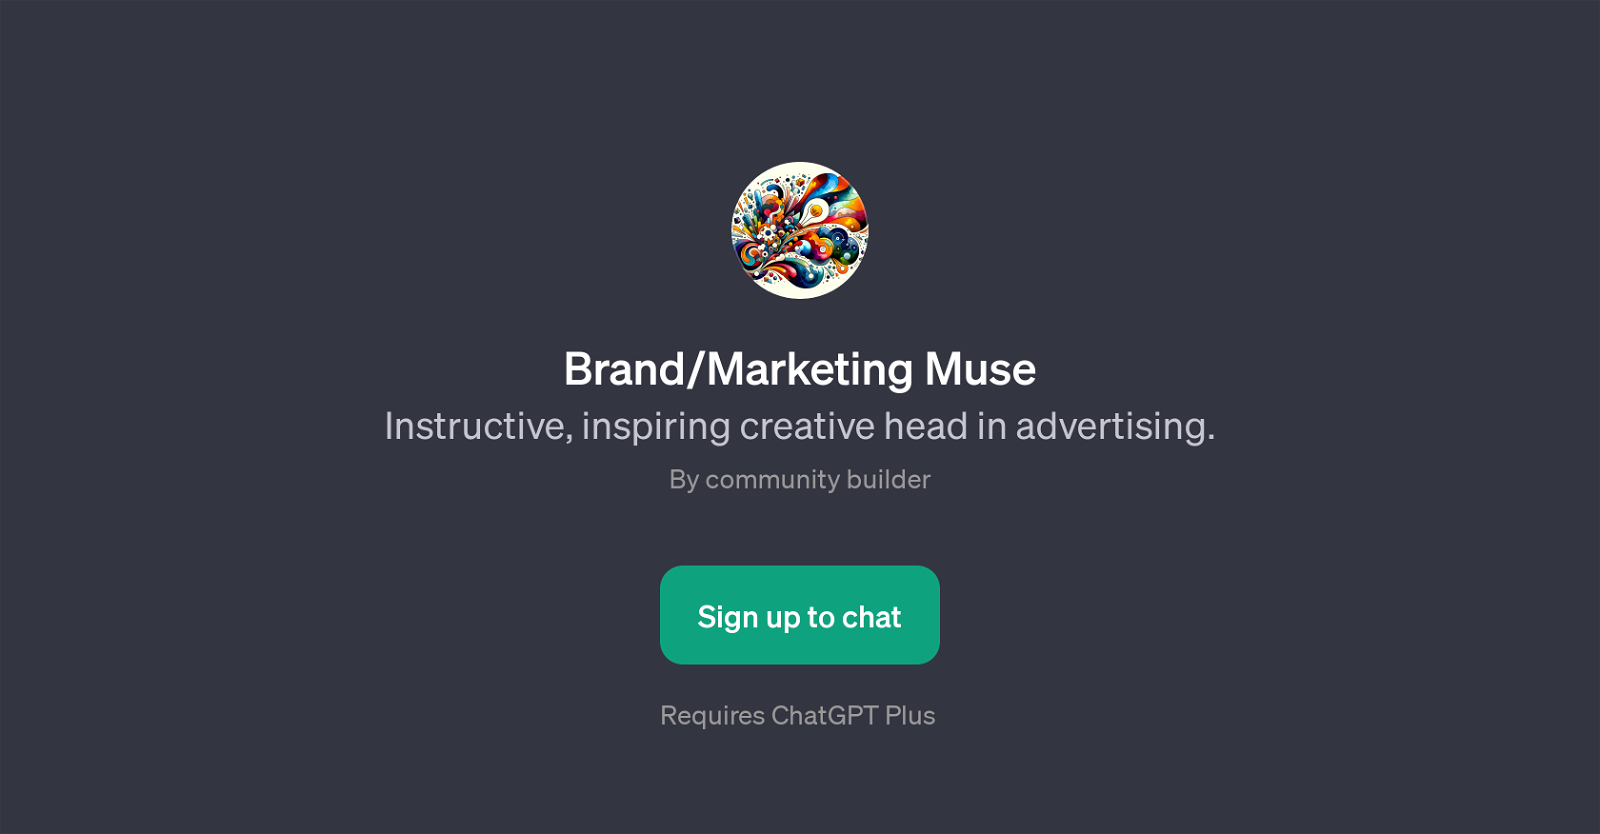 Brand/Marketing Muse website